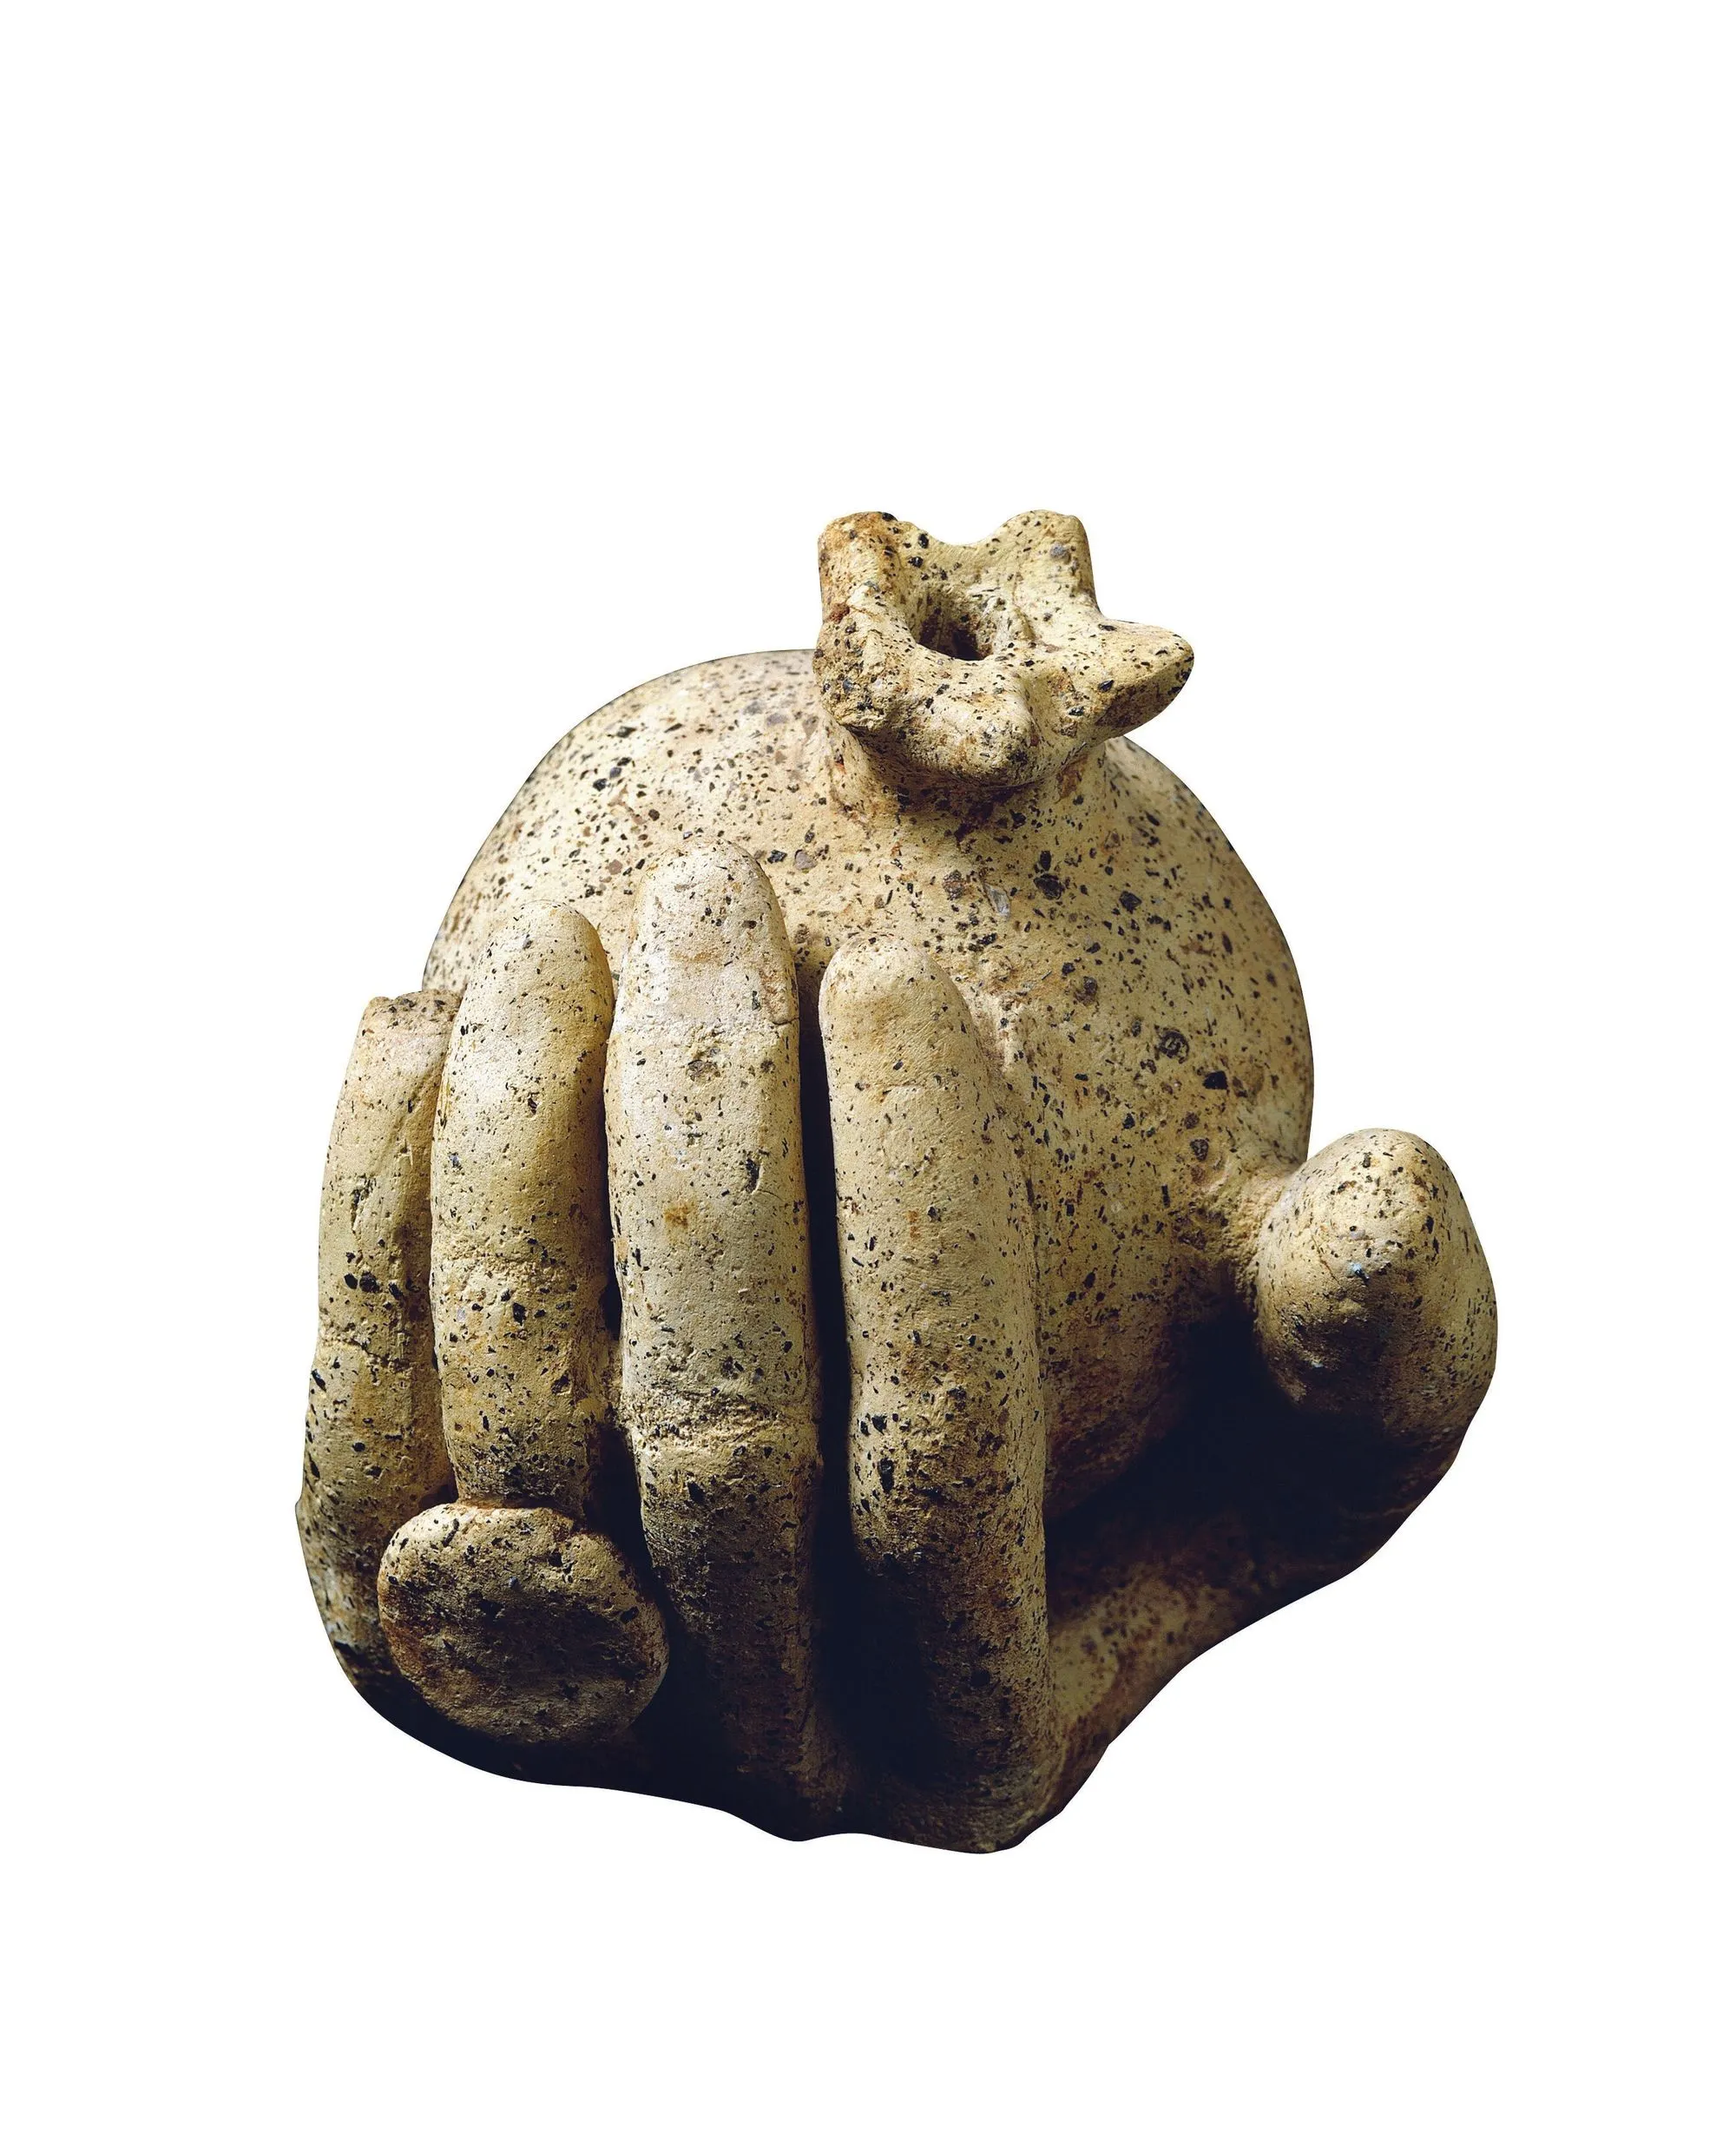 Main tenant une grenade, Ve siècle av. J.-C., sculpture en terre cuite, Pomezia, Italie.